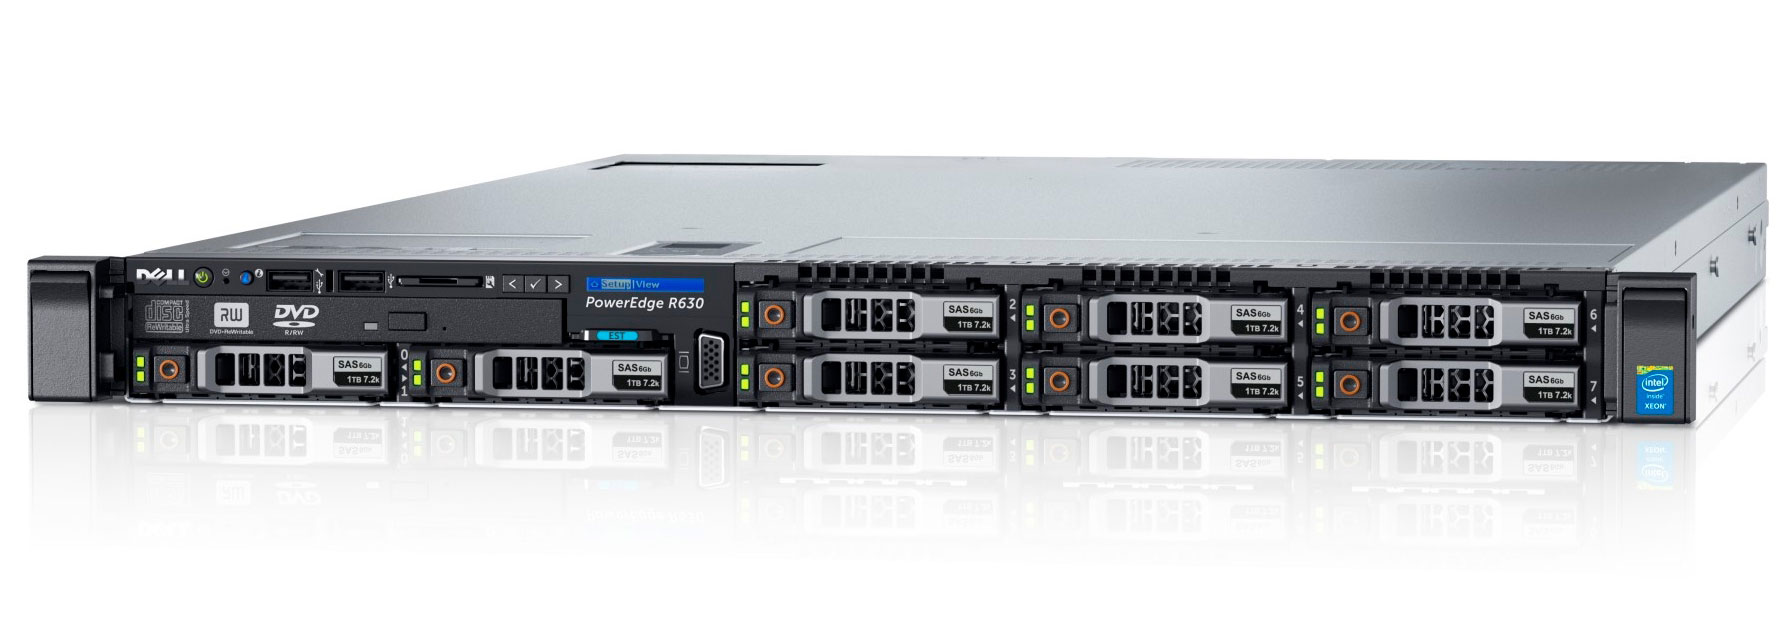 Подробное фото Сервер DELL PowerEdge R630 2x Xeon E5-2640v3 64Gb 2133P DDR4 8x noHDD 2.5" SAS RAID Perc H730, 1024Mb, DVD, 2*PSU